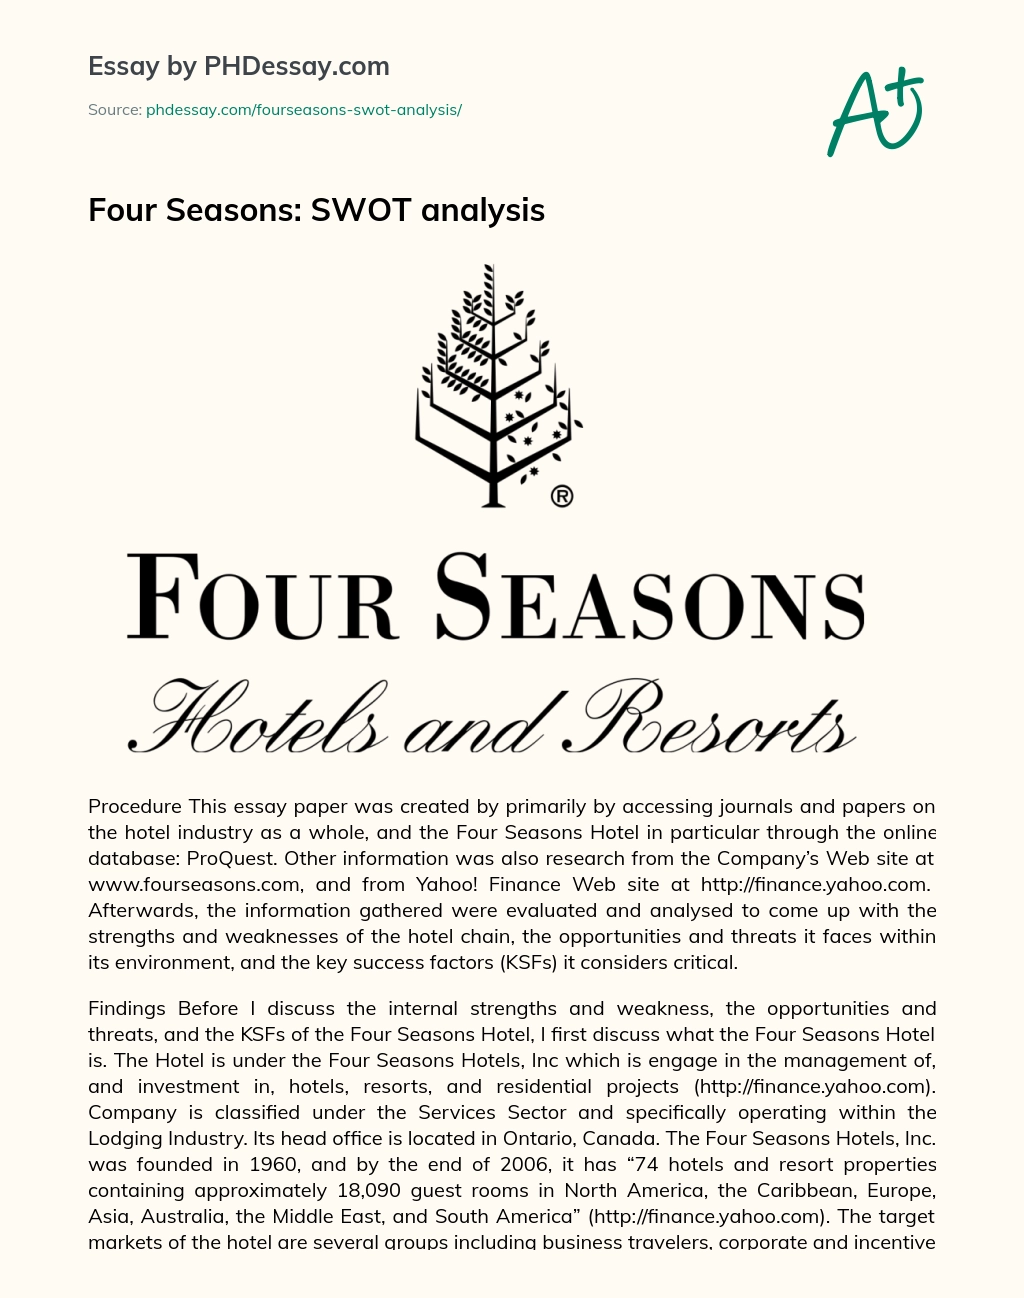 Four Seasons: SWOT analysis essay